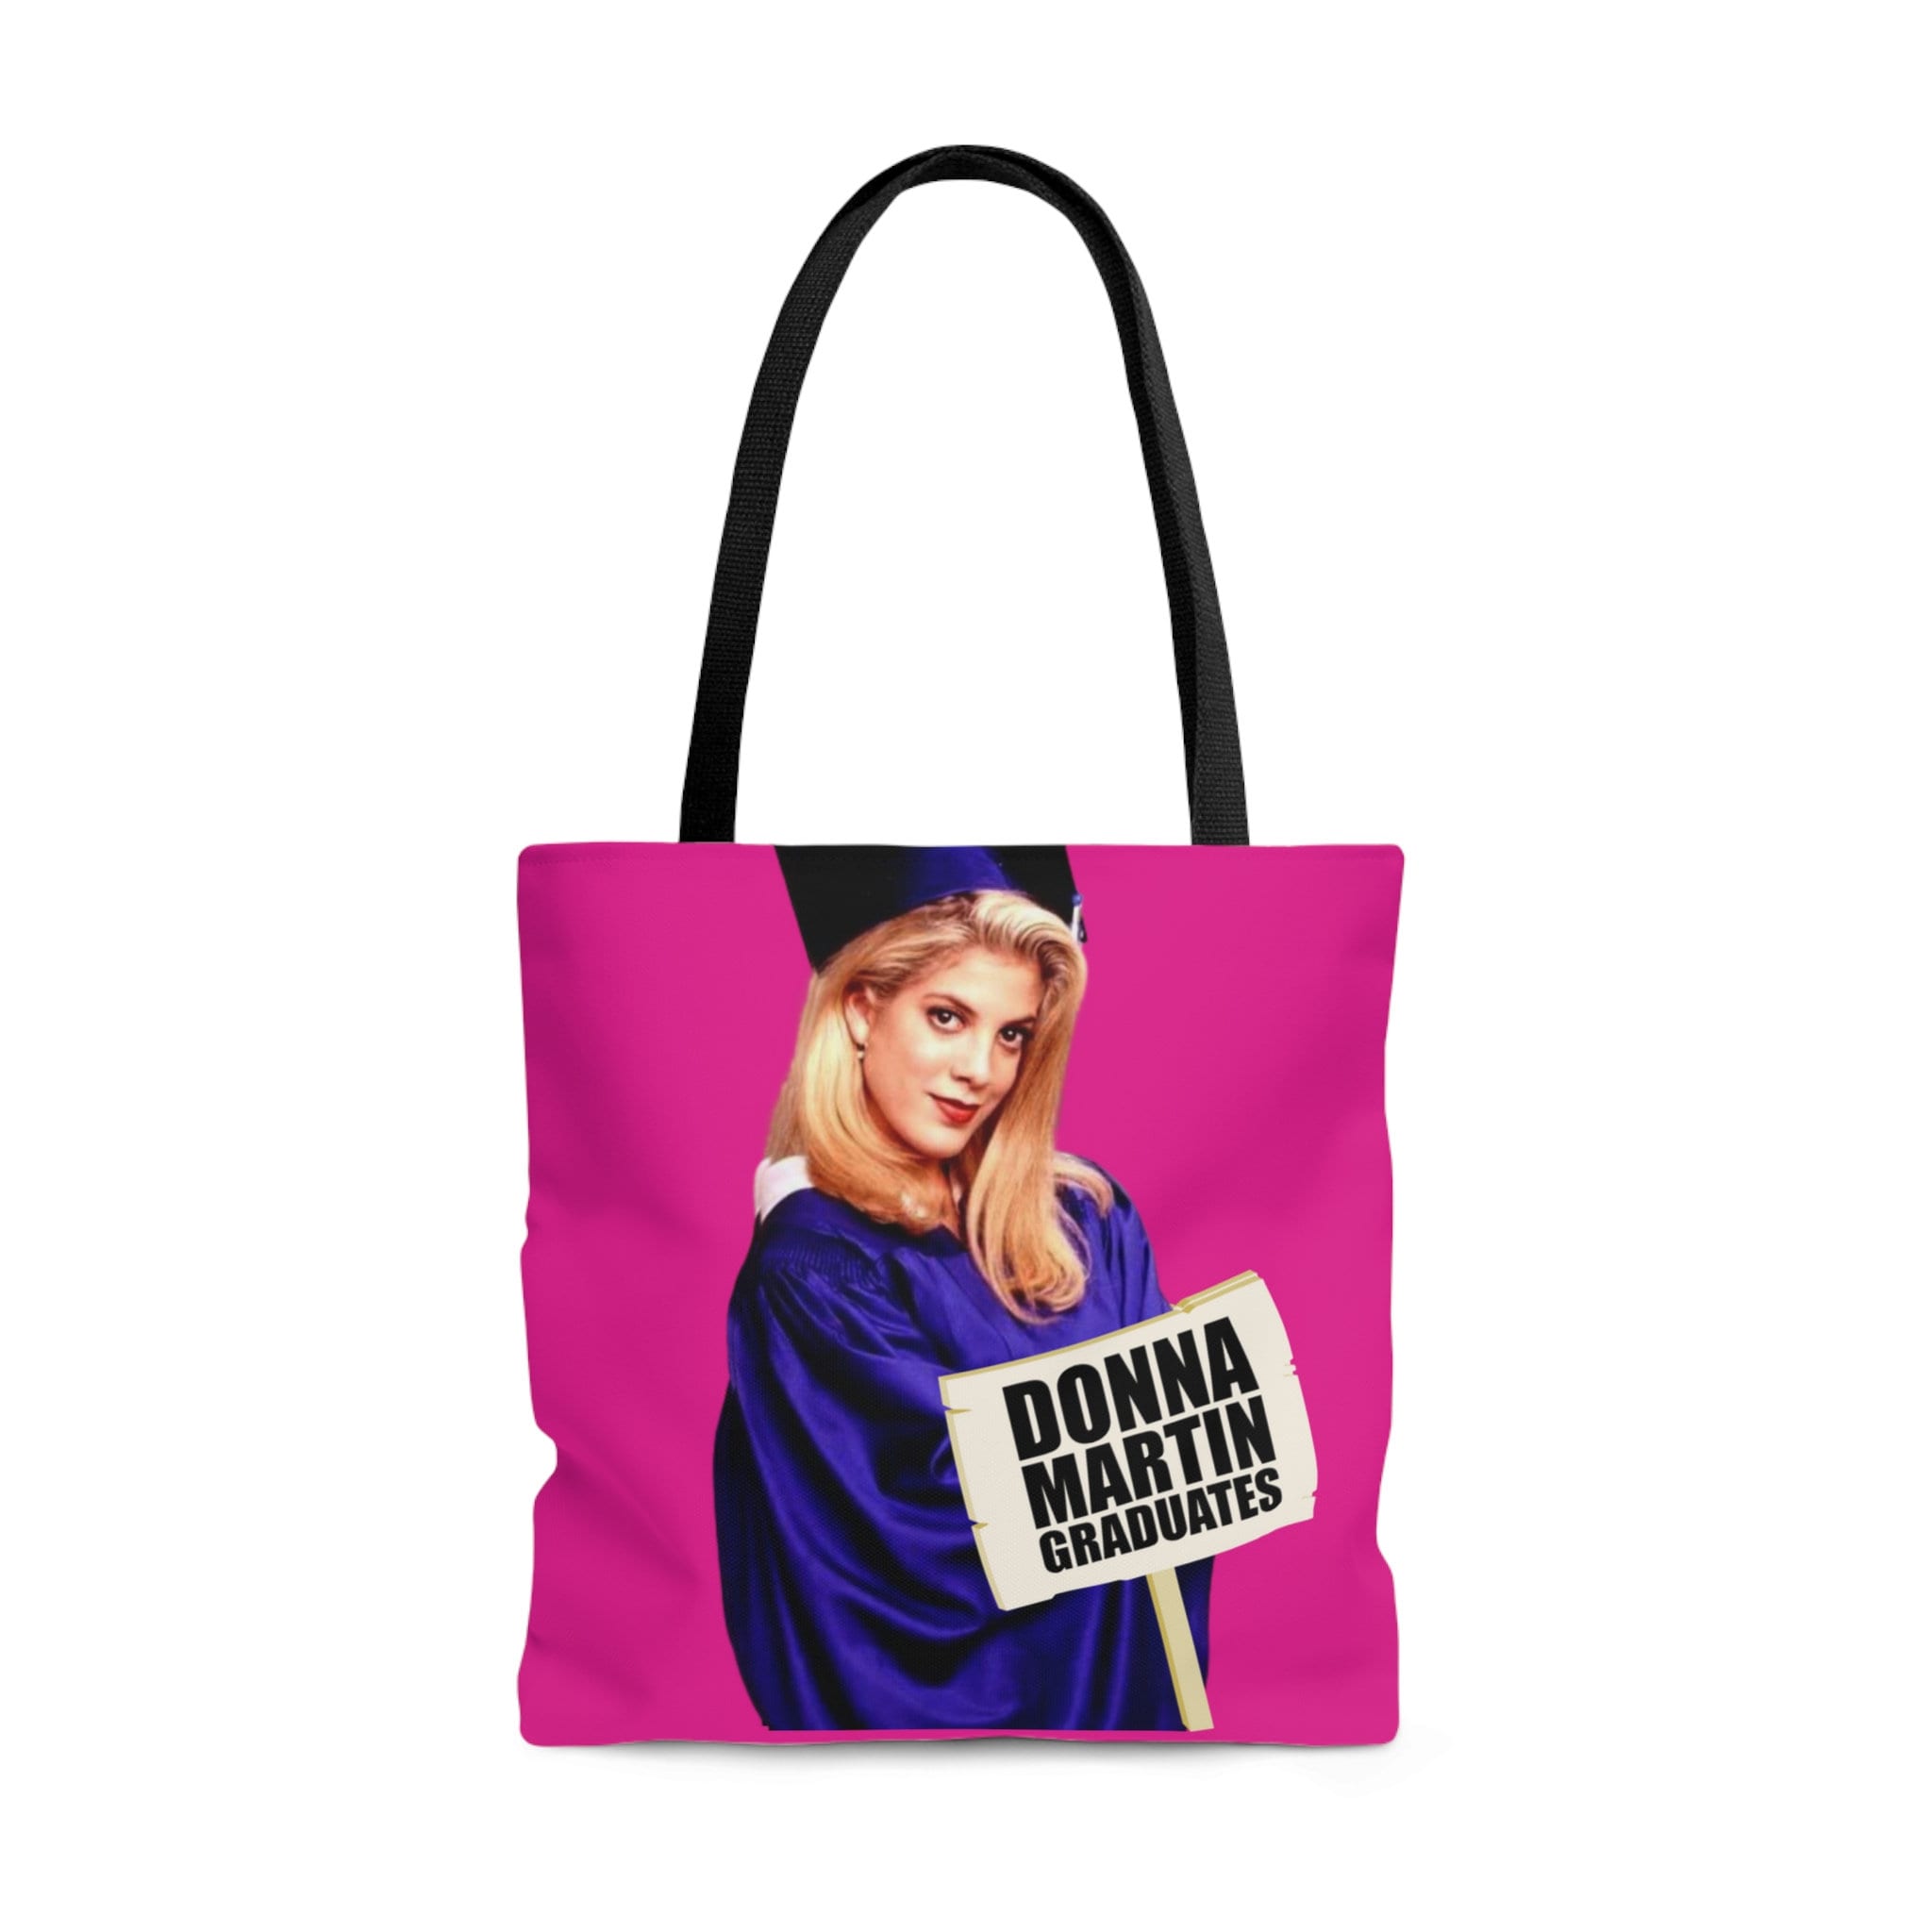 Donna Martin Graduates Tote Bag, Beverly Hills 90210, Retro Tori Spelling,  90's Tote Bag, Trendy Summer Bag, Gift for Graduate 